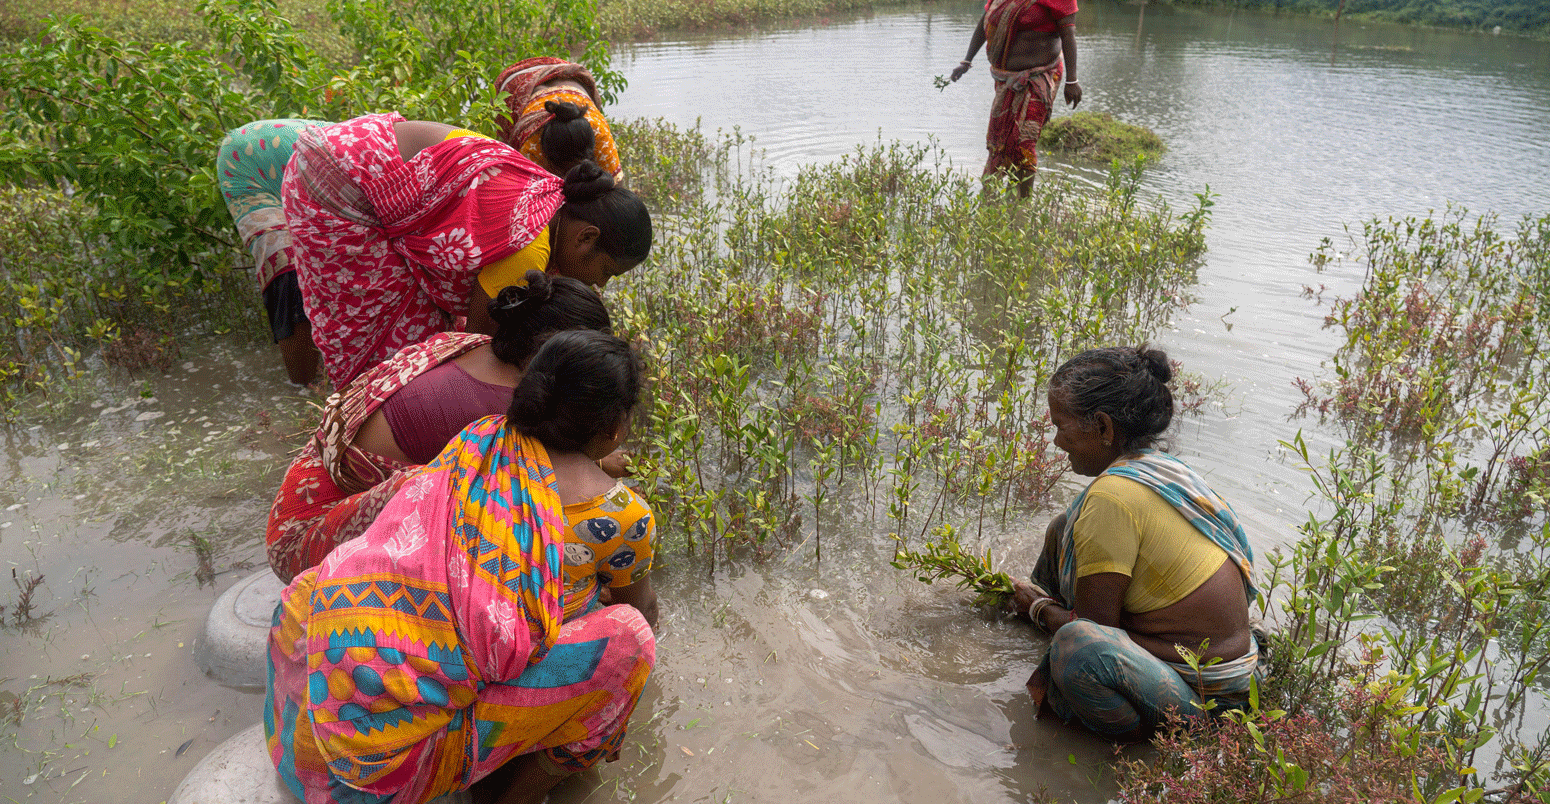 Women plant mangrove saplings in the riverside in the Sundarbans.